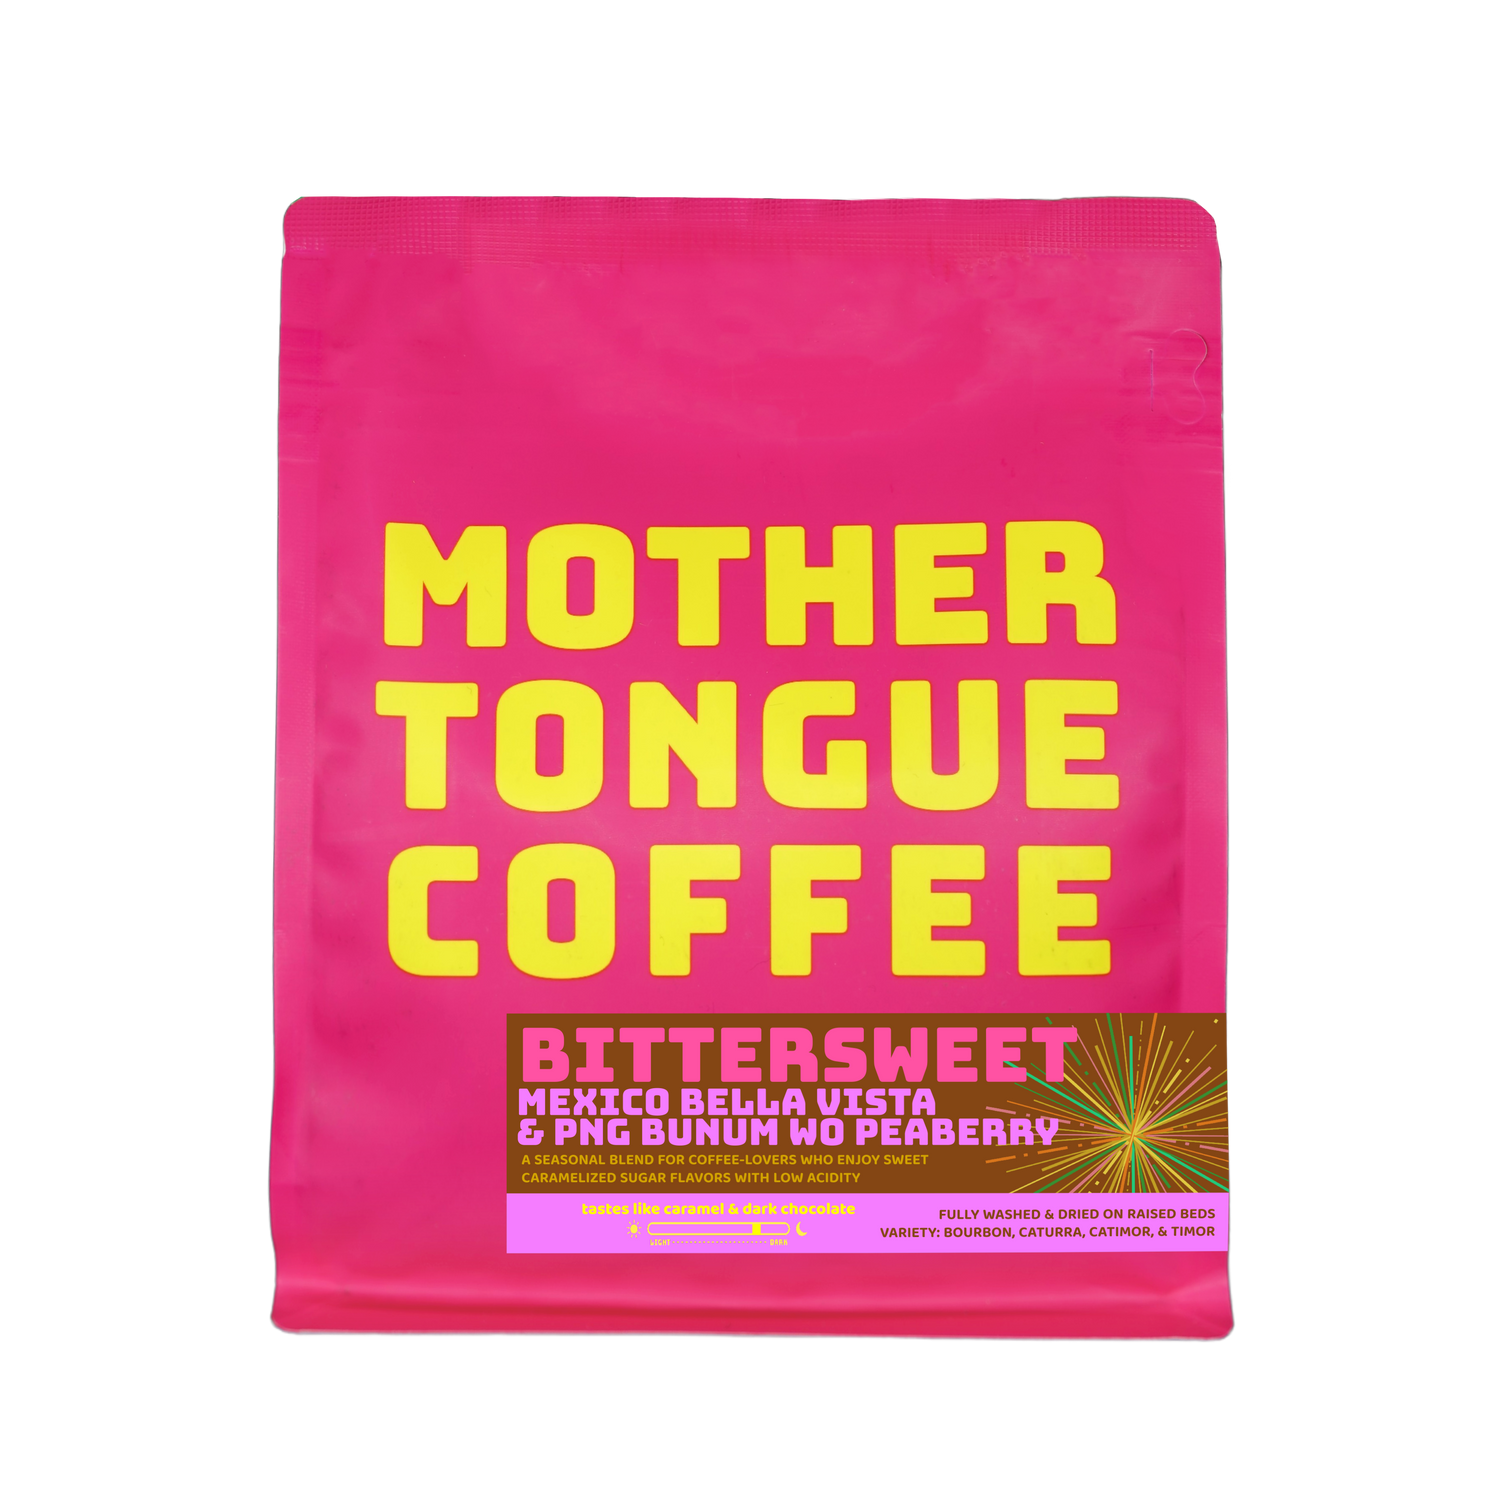 BITTERSWEET - A medium-dark blend - Mother Tongue Coffee